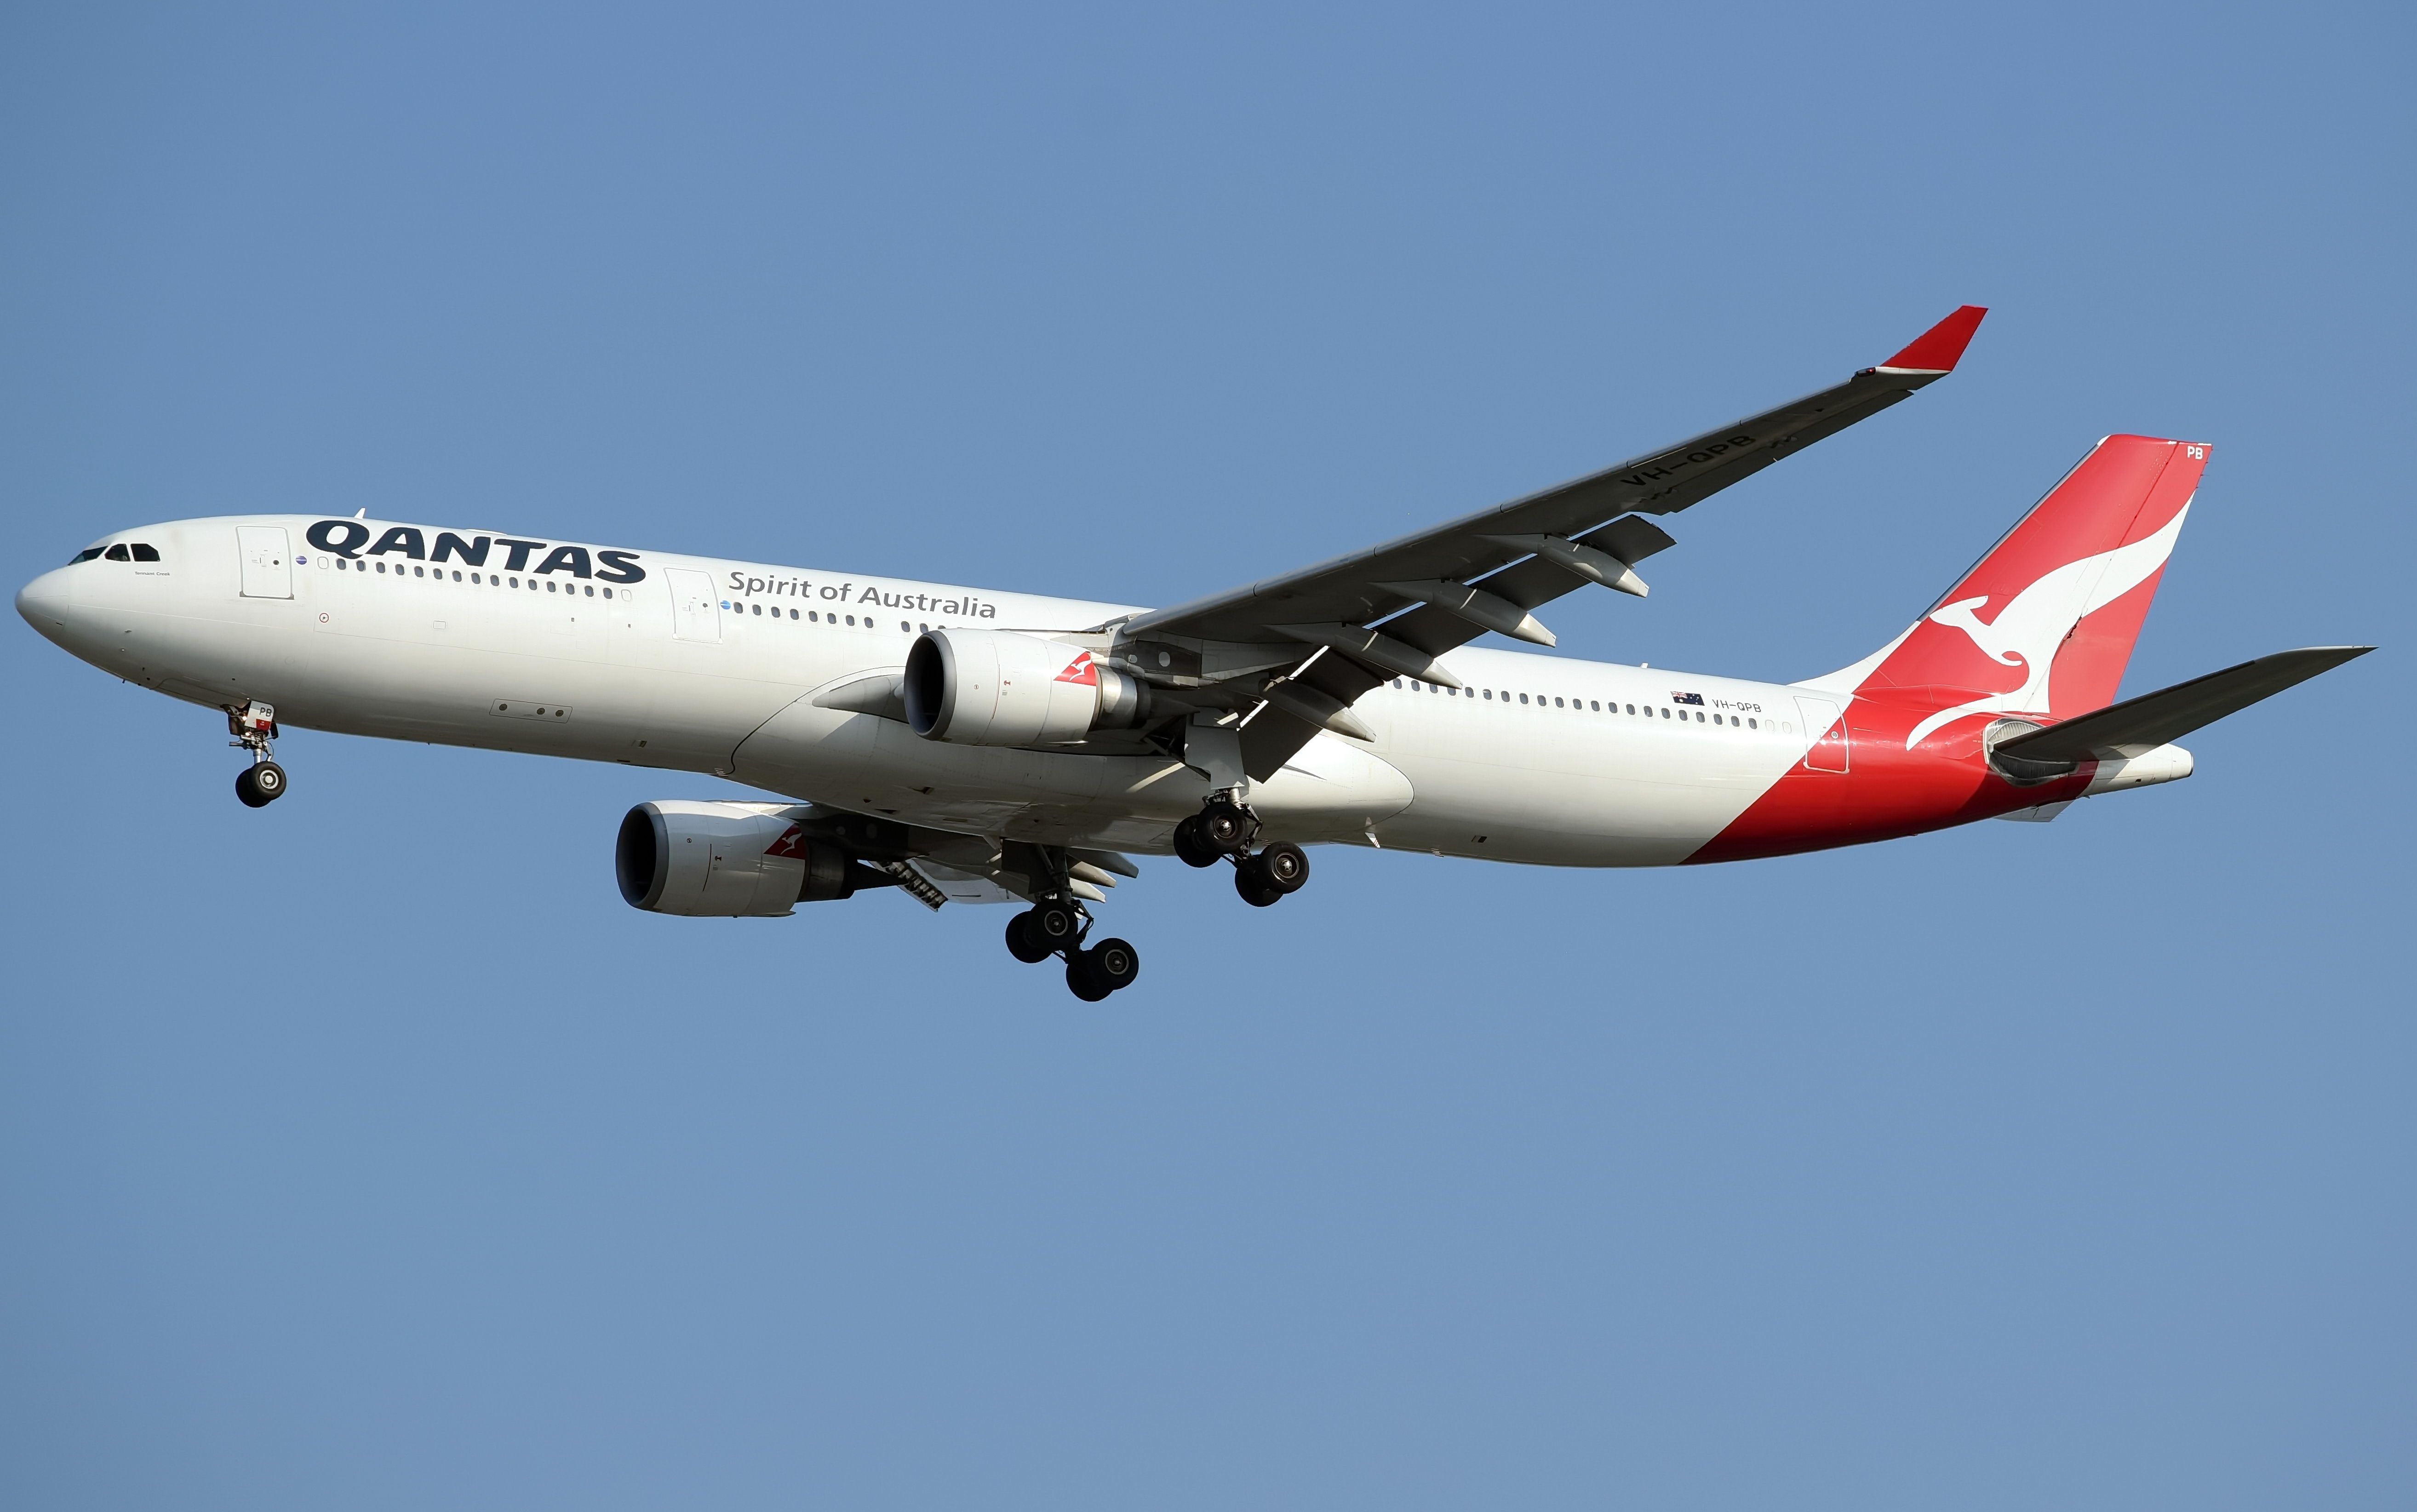 Qantas Airbus A330 in the sky